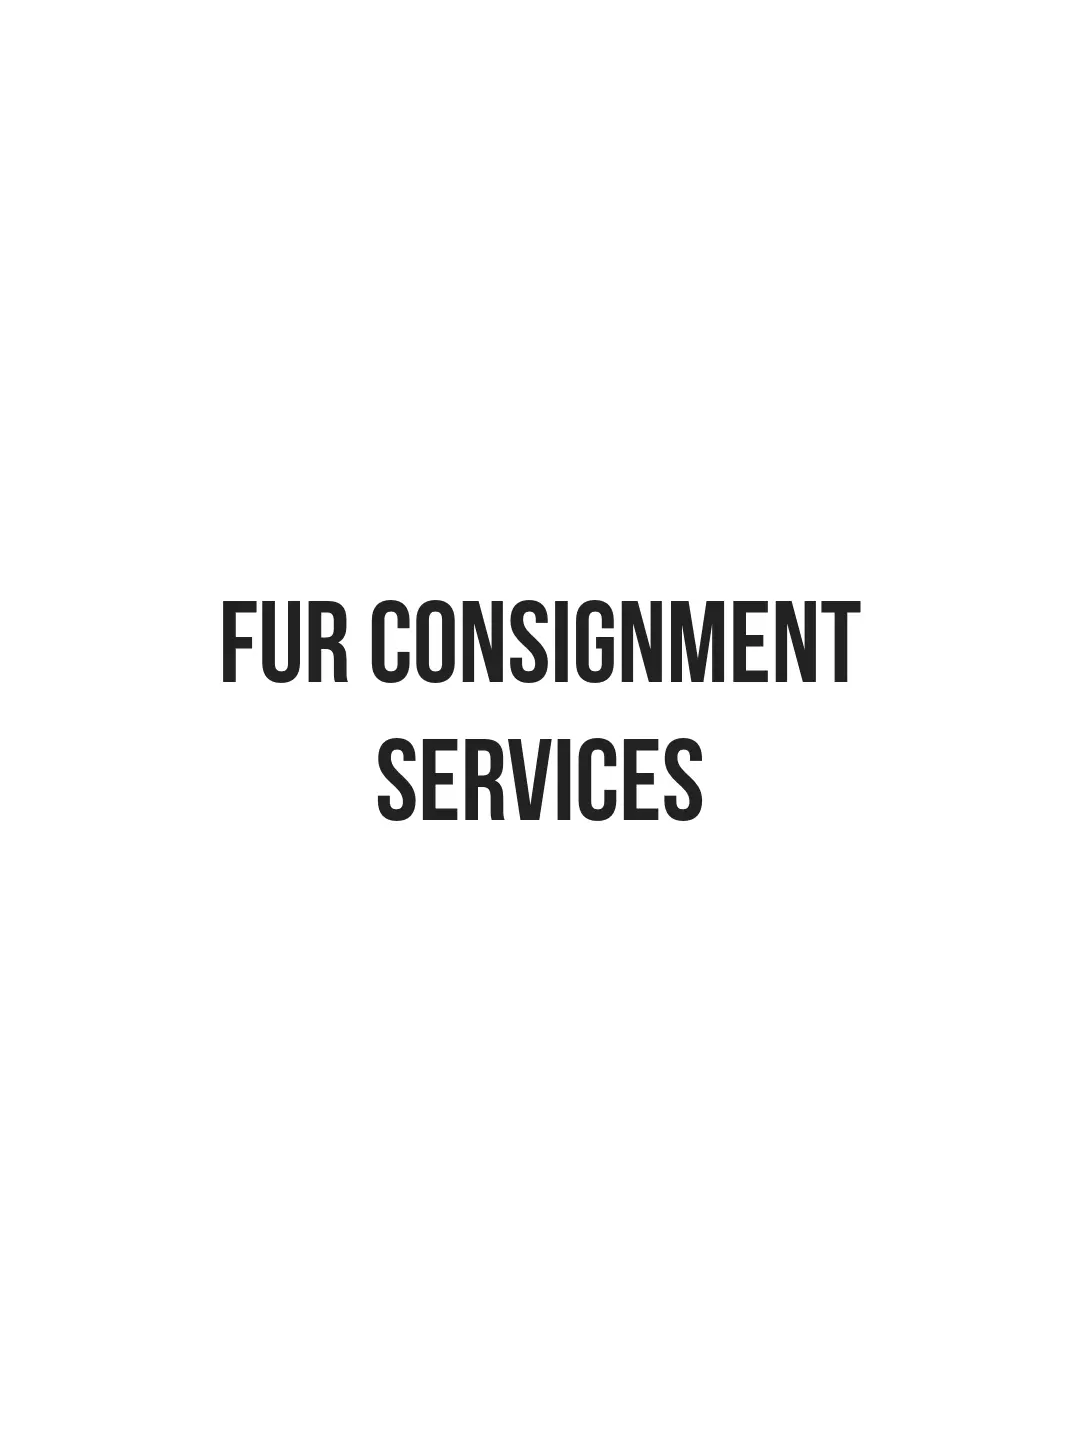 LaBelle Since 1919 Fur Consignment Services